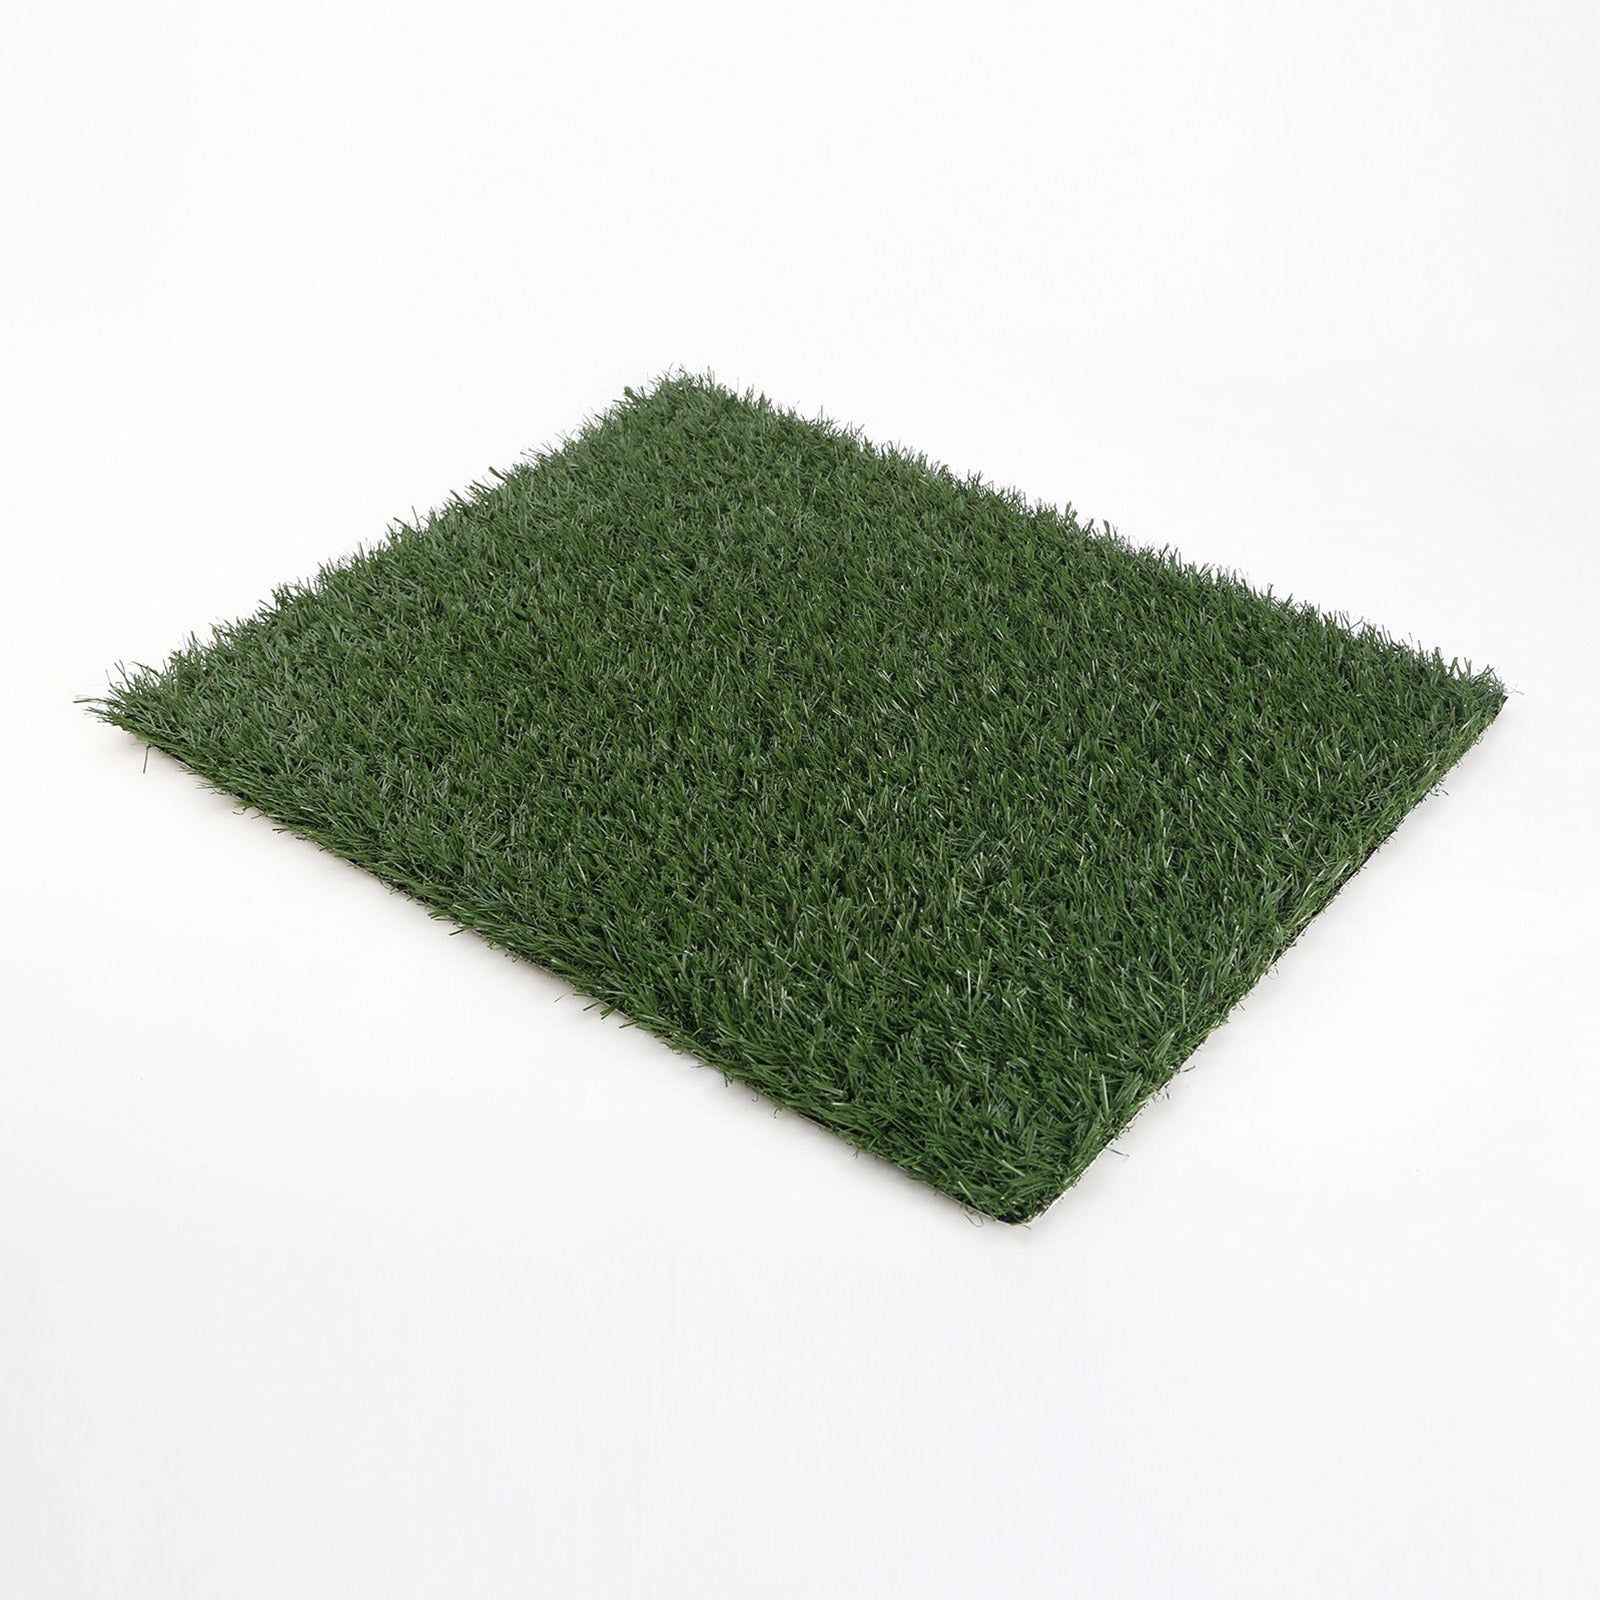 1 Grass Mat for Pet Dog Potty Tray Training Toilet 58.5cm x 46cm - image5